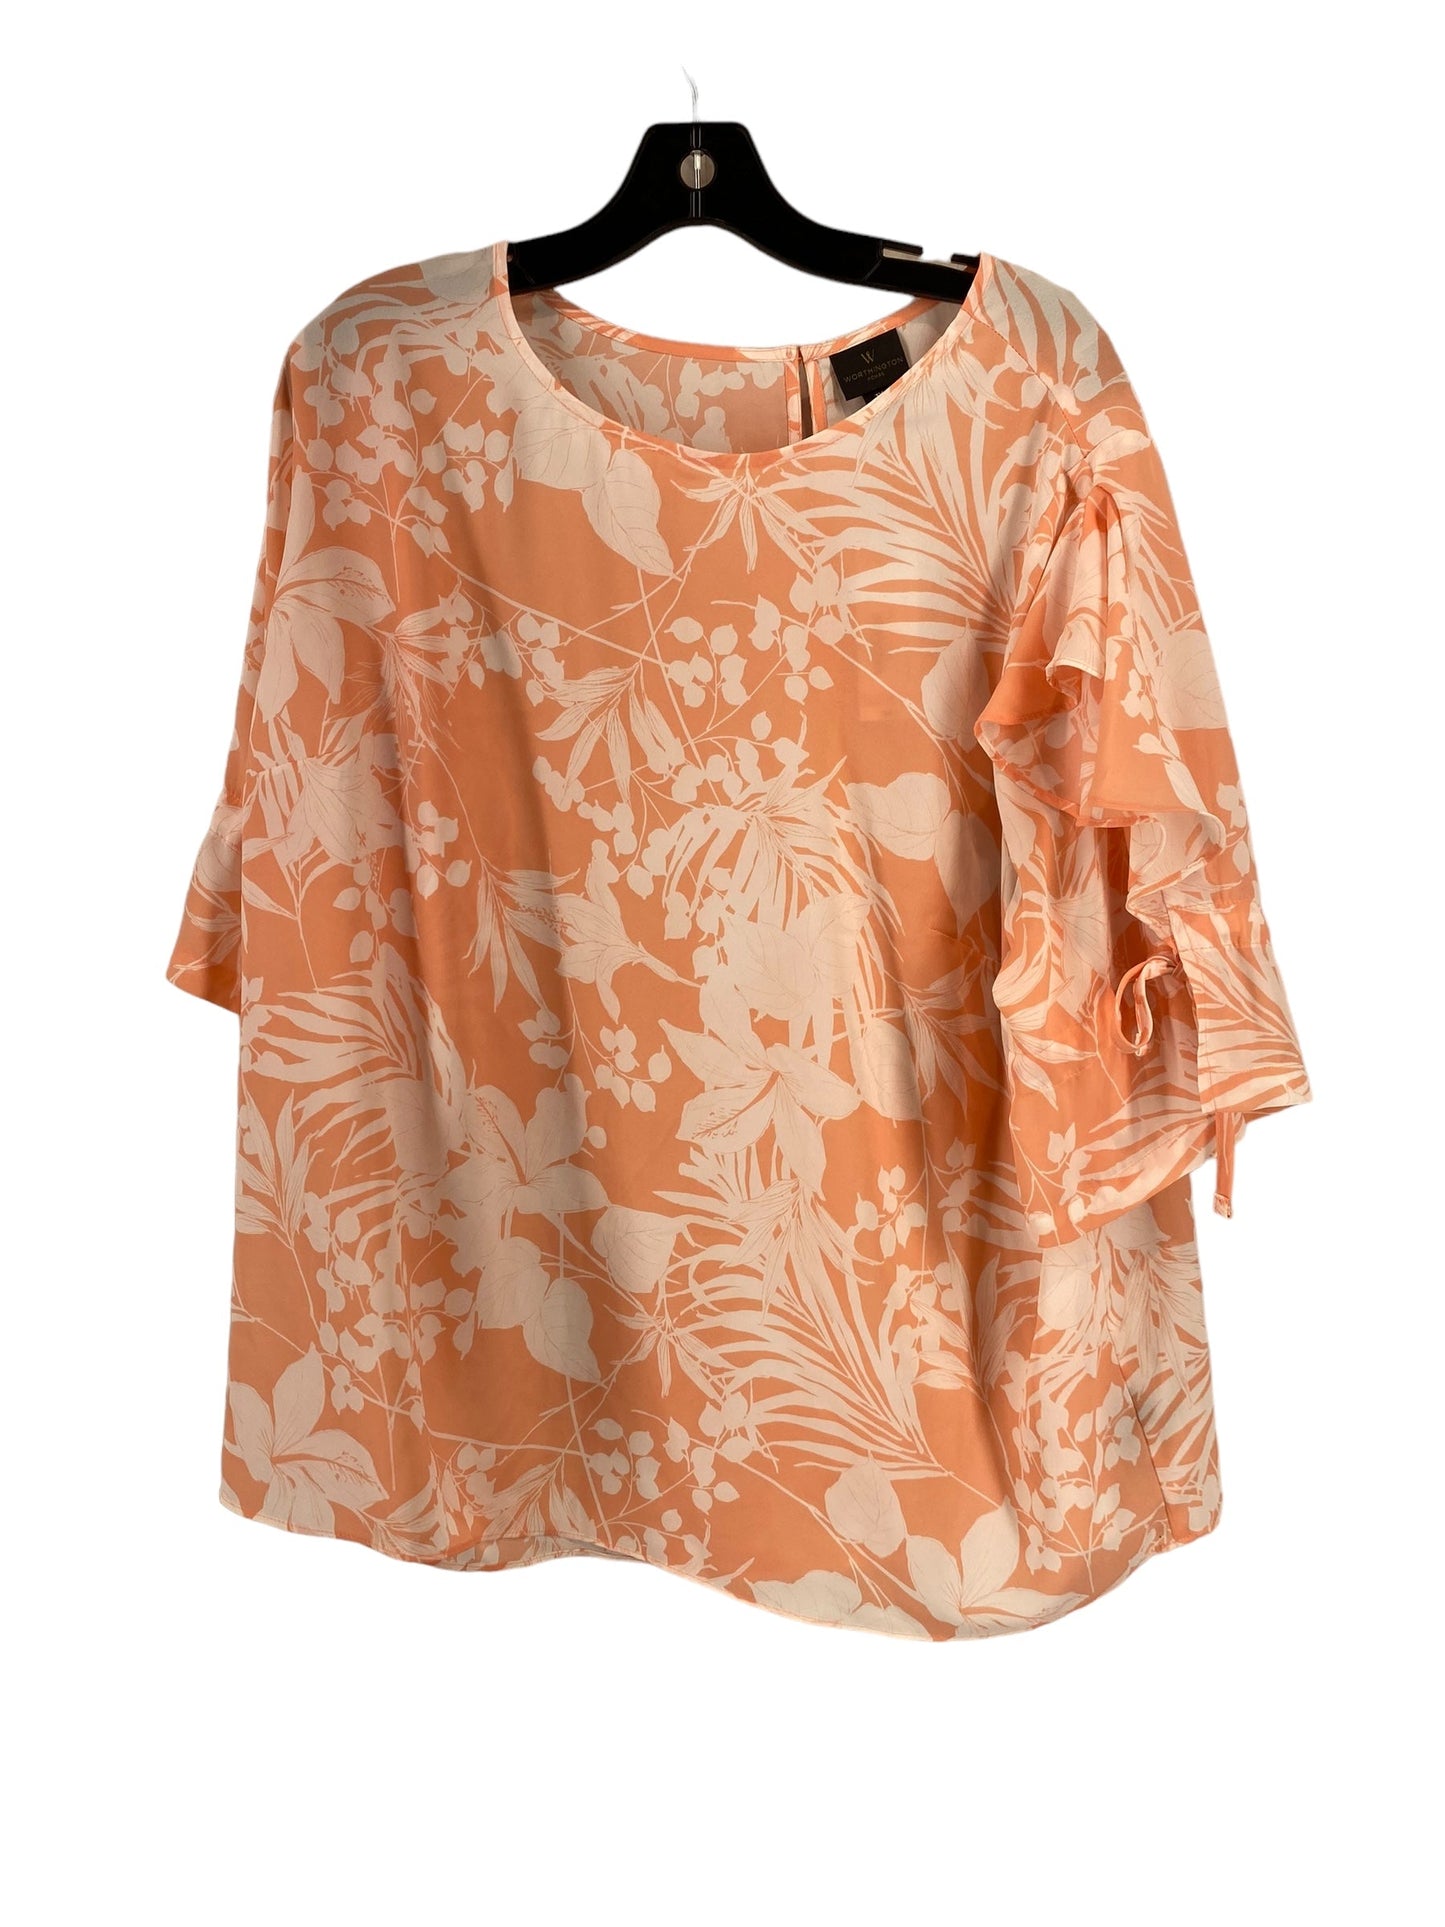 Floral Print Blouse Short Sleeve Worthington, Size 1x